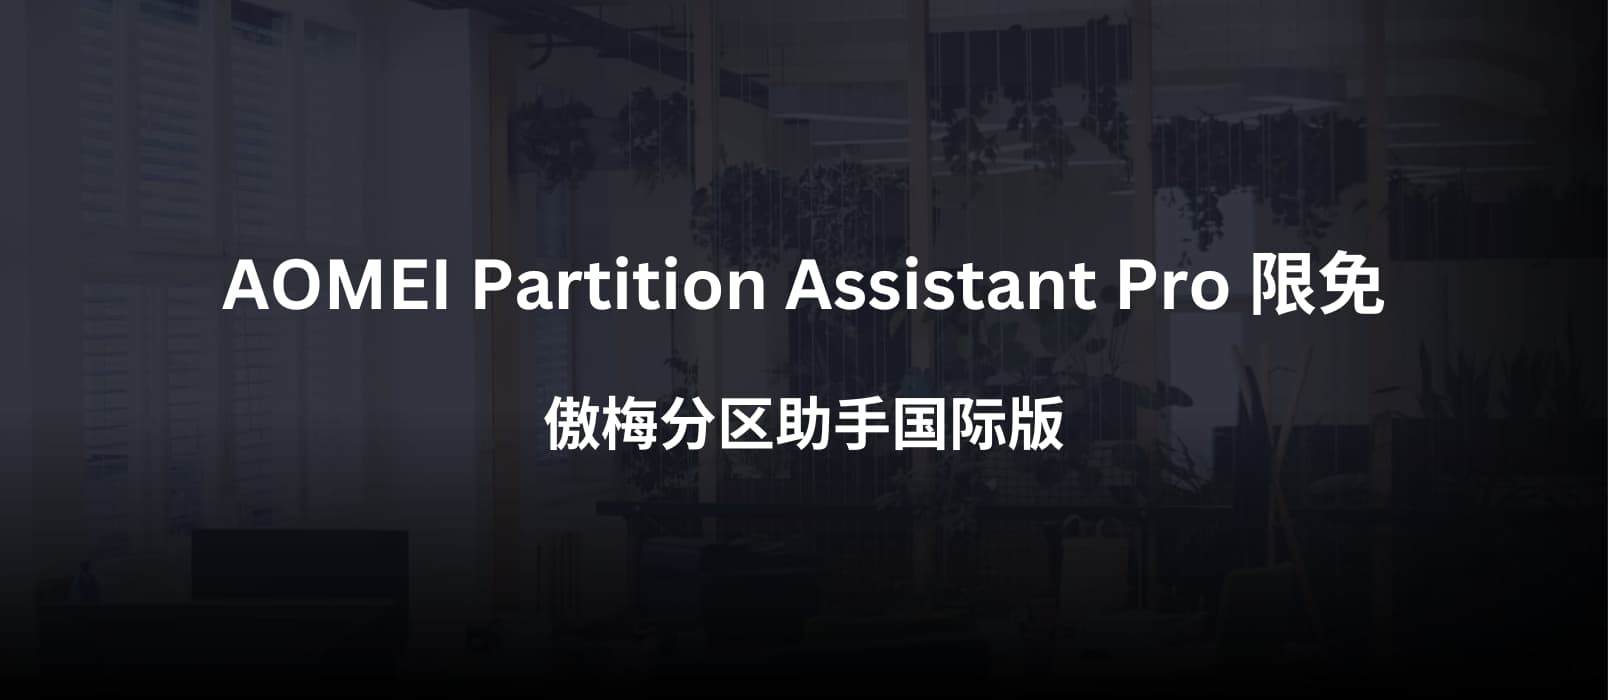 AOMEI Partition Assistant Pro 限免：傲梅分区助手国际版